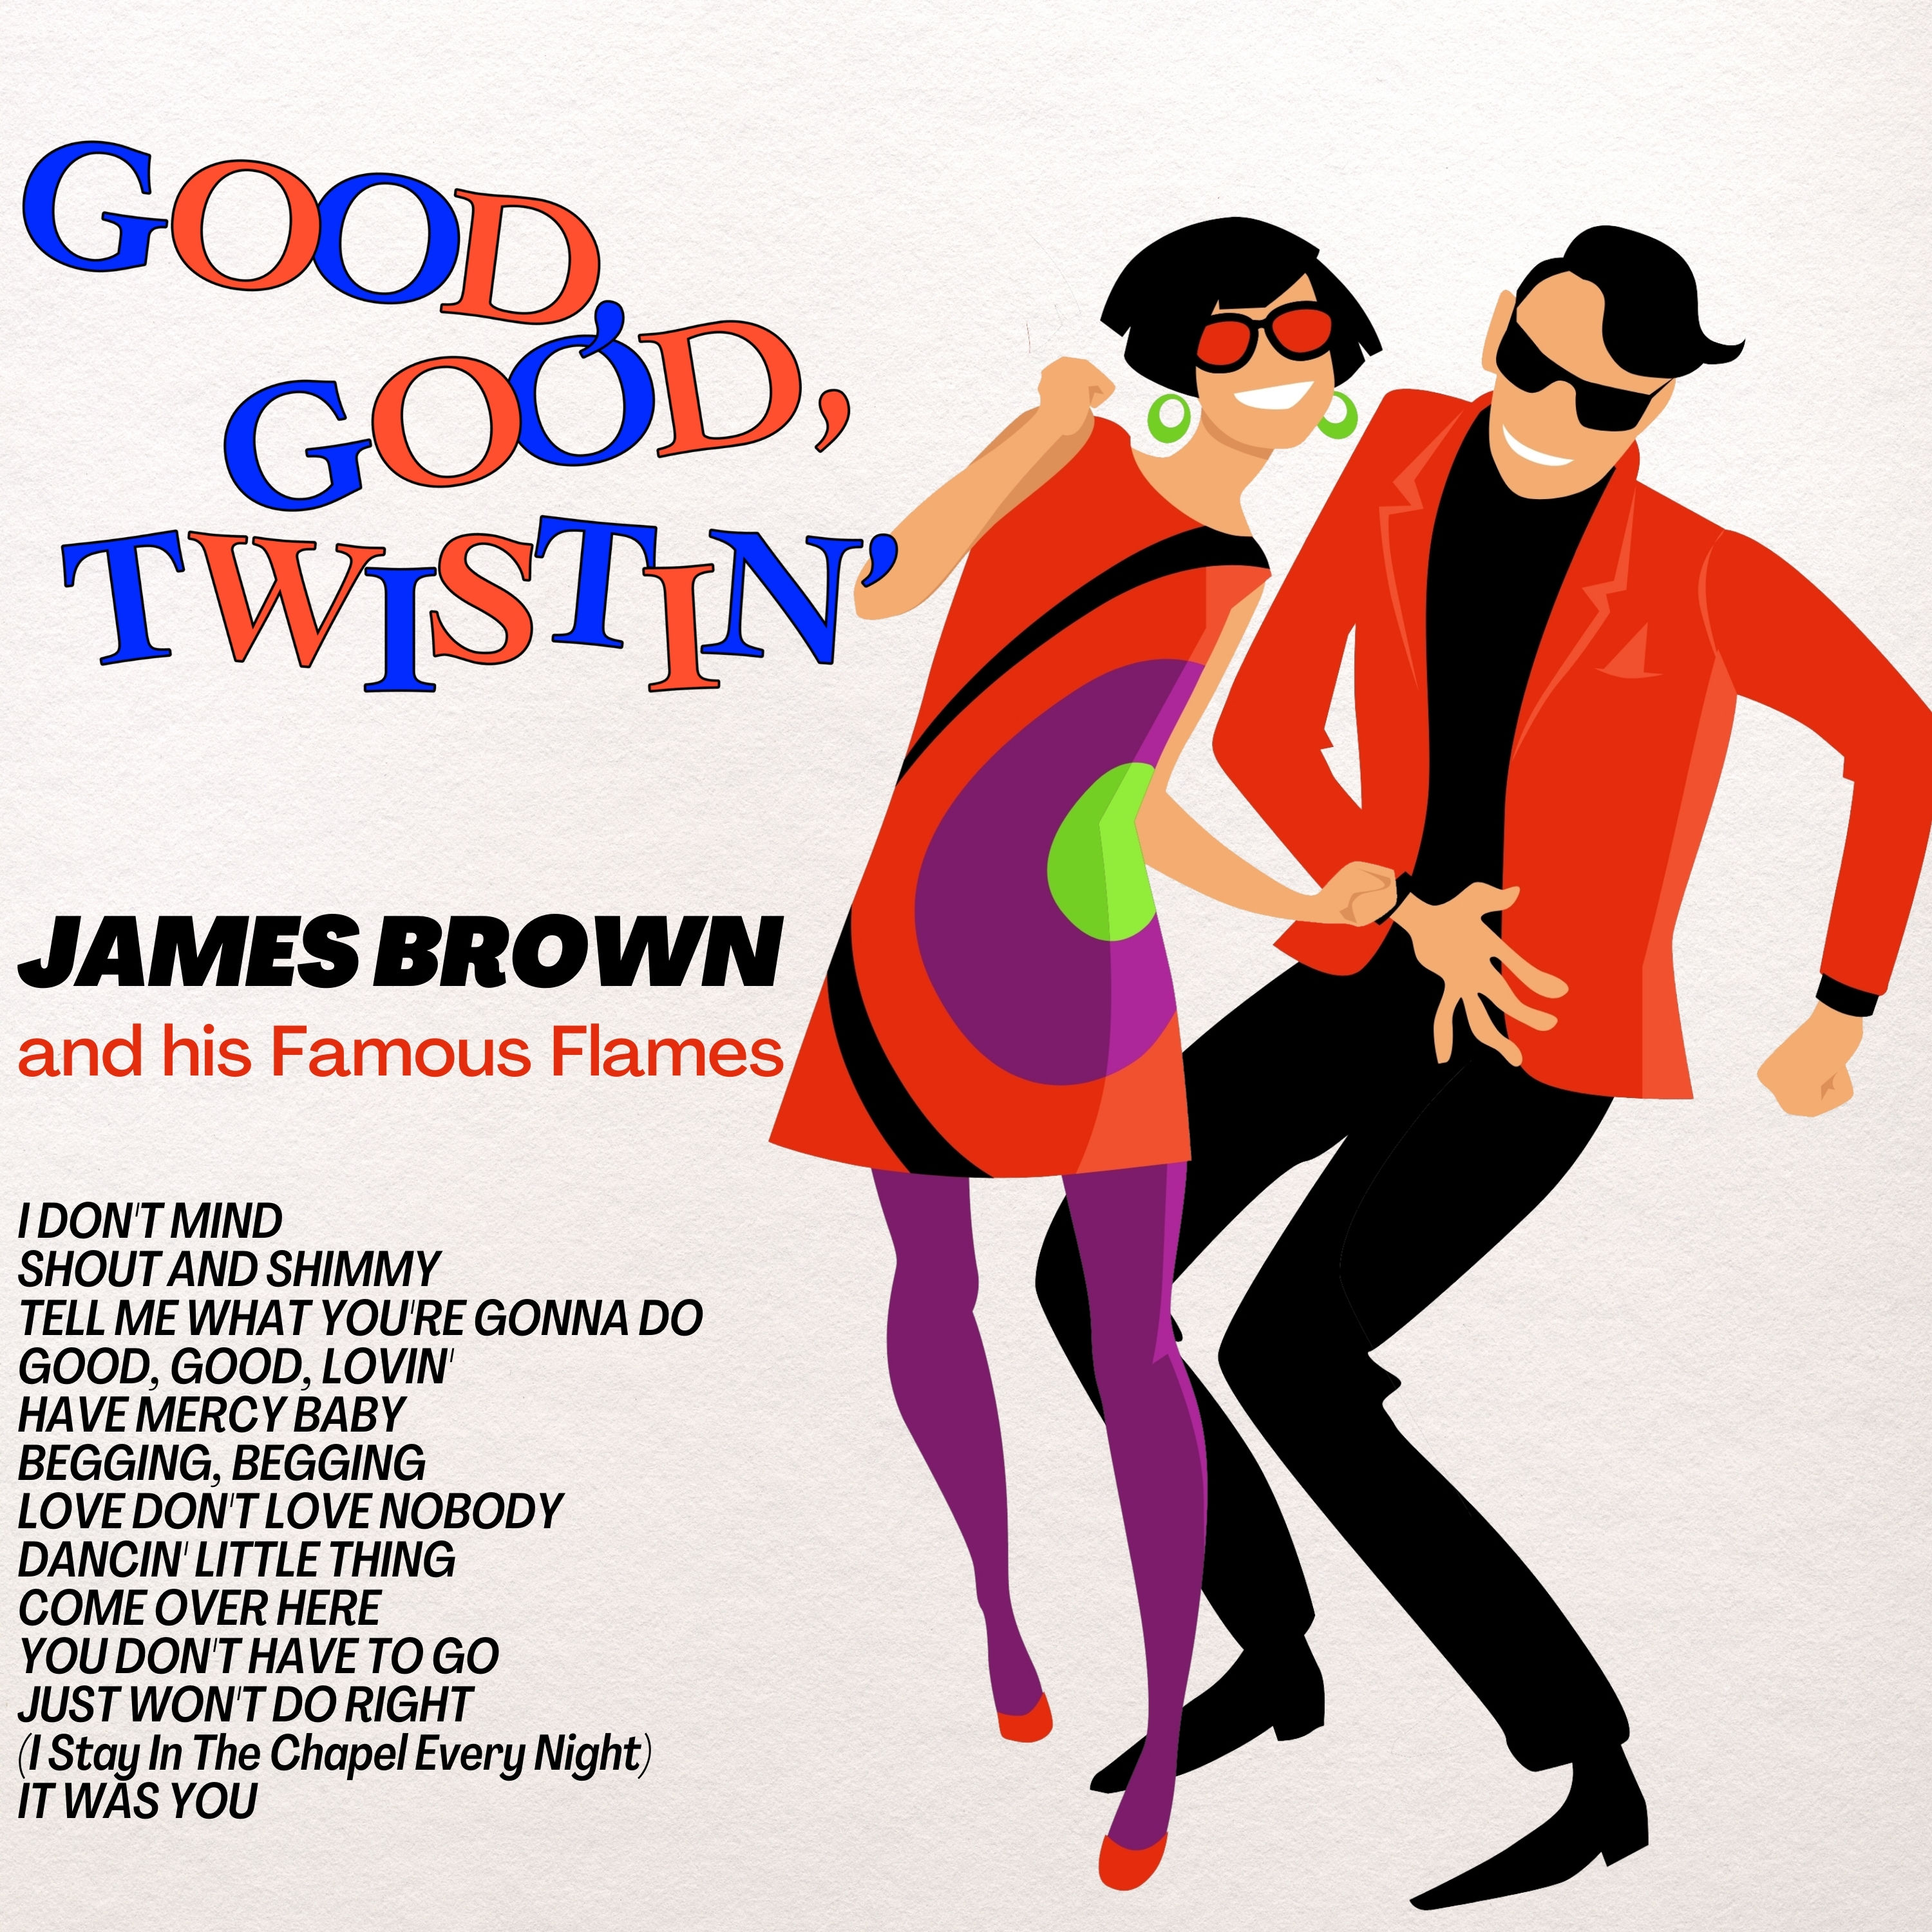 James Brown - Good, Good, Twistin’ (1962/2021) [FLAC 24bit/48kHz]